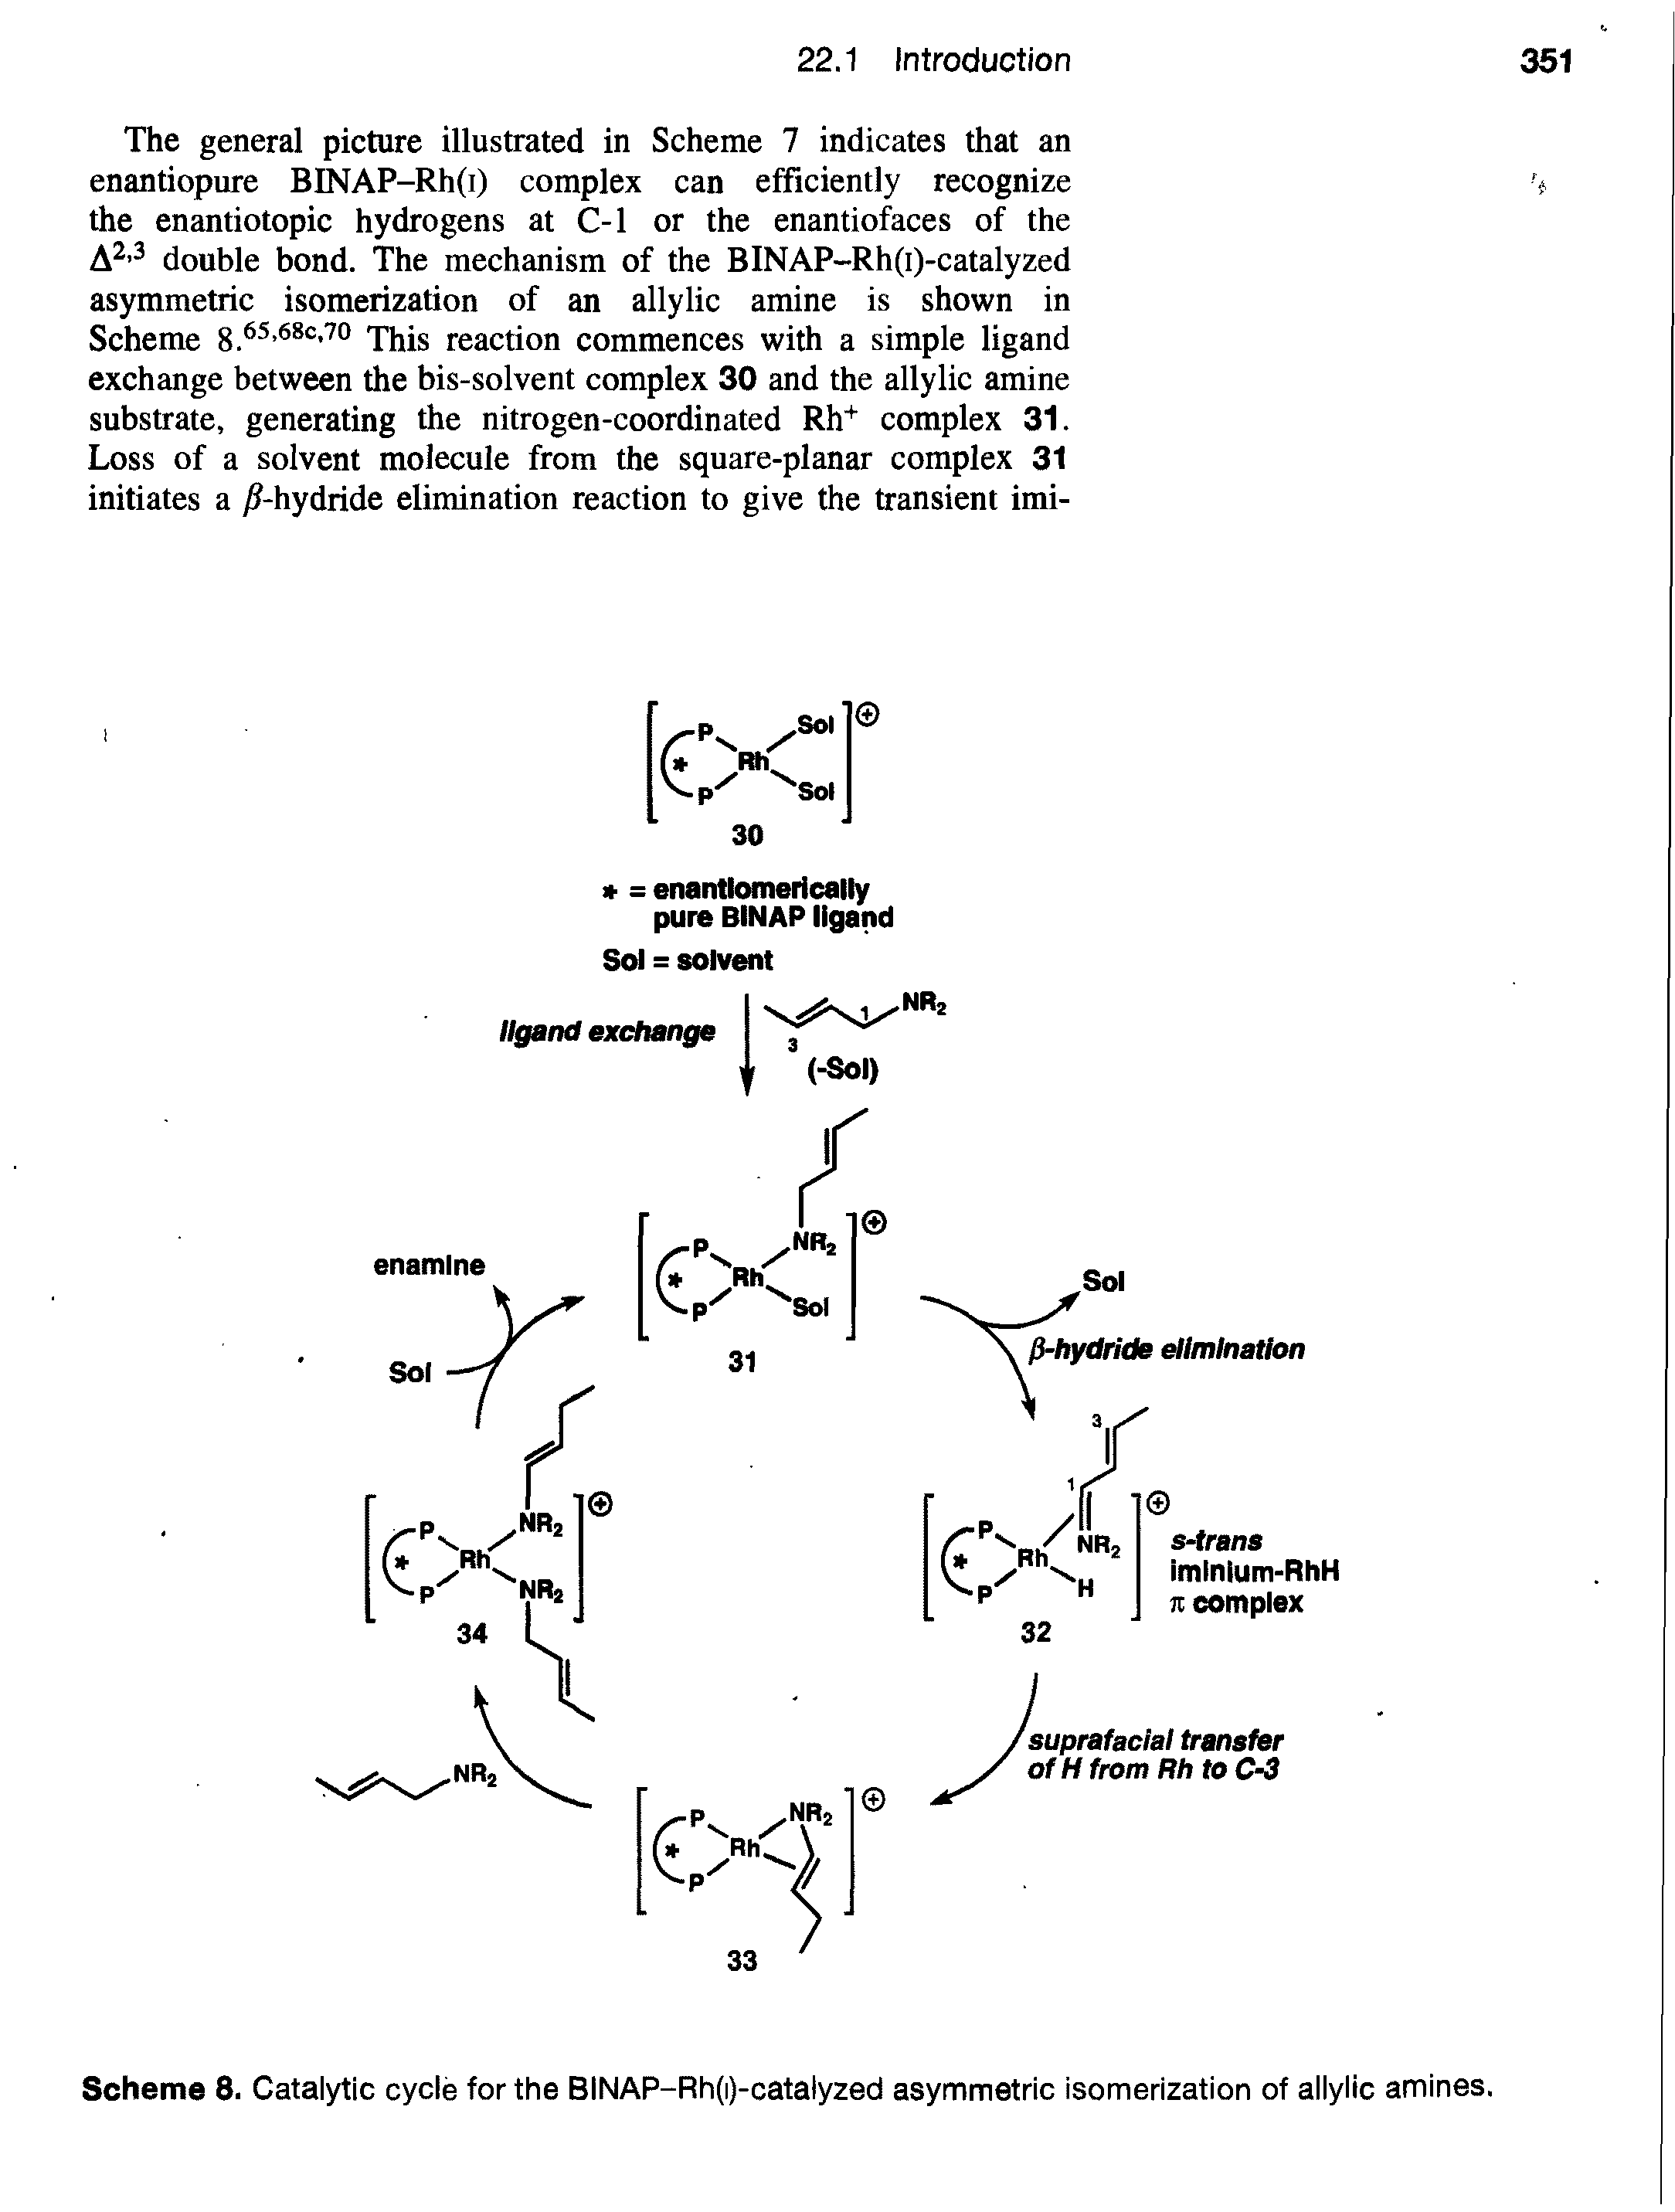 Scheme 8. Catalytic cycle for the BINAP-Rh(i)-catalyzed asymmetric isomerization of allylic amines.